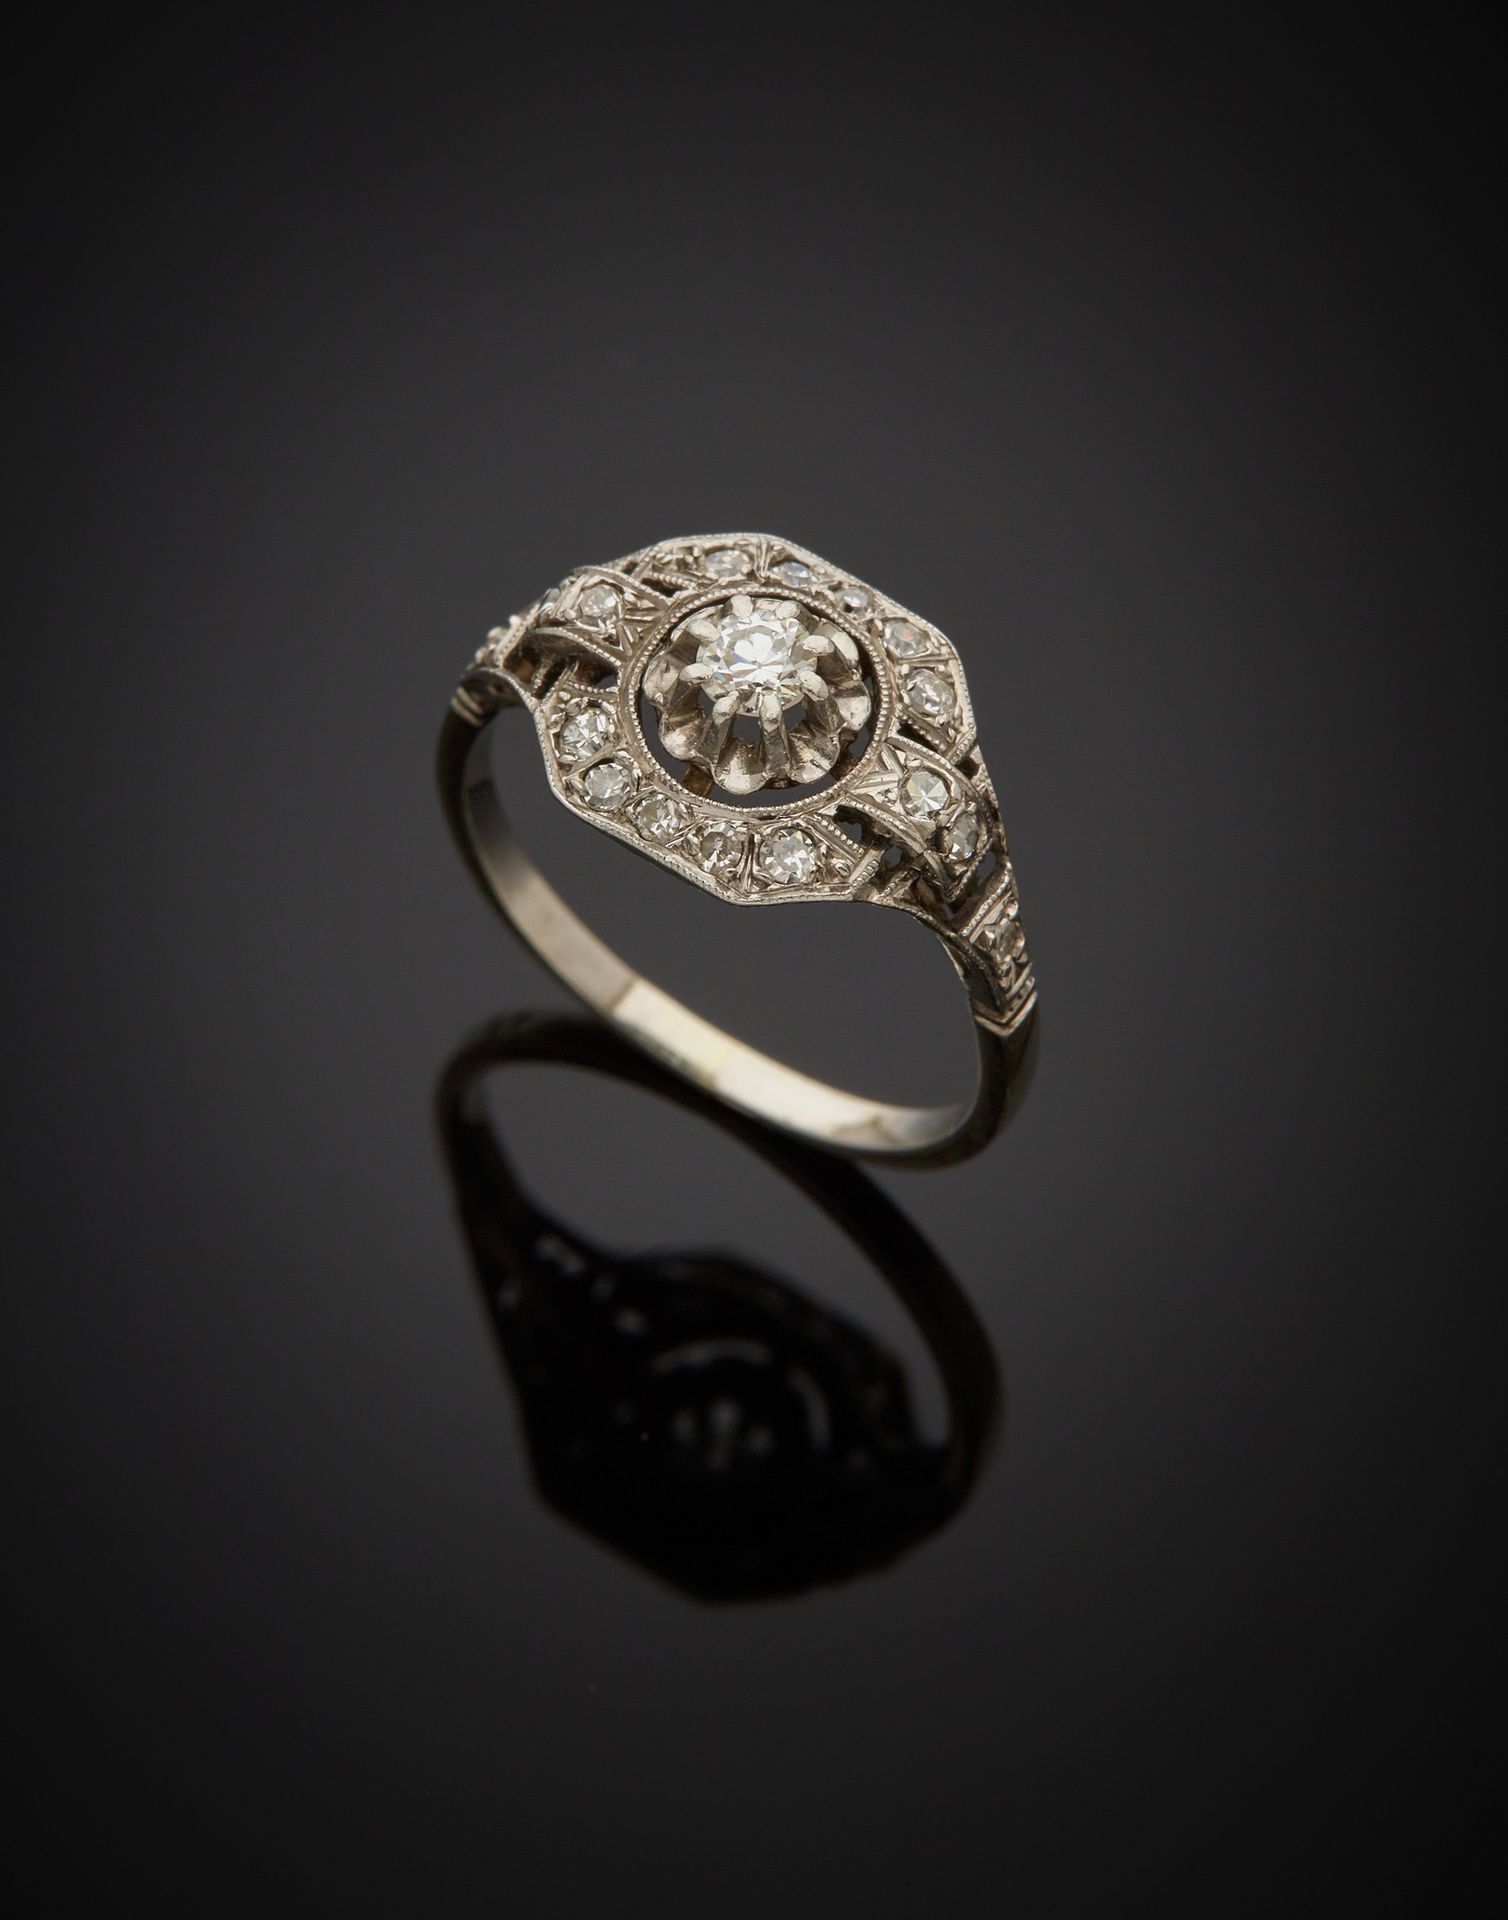 Null 一枚18K白金750‰和铂金850‰的戒指，呈几何形状，中央镶嵌着一颗半切钻石，周围环绕着八分之一的钻石。

石头碎裂，有使用的痕迹。法国作品，约19&hellip;